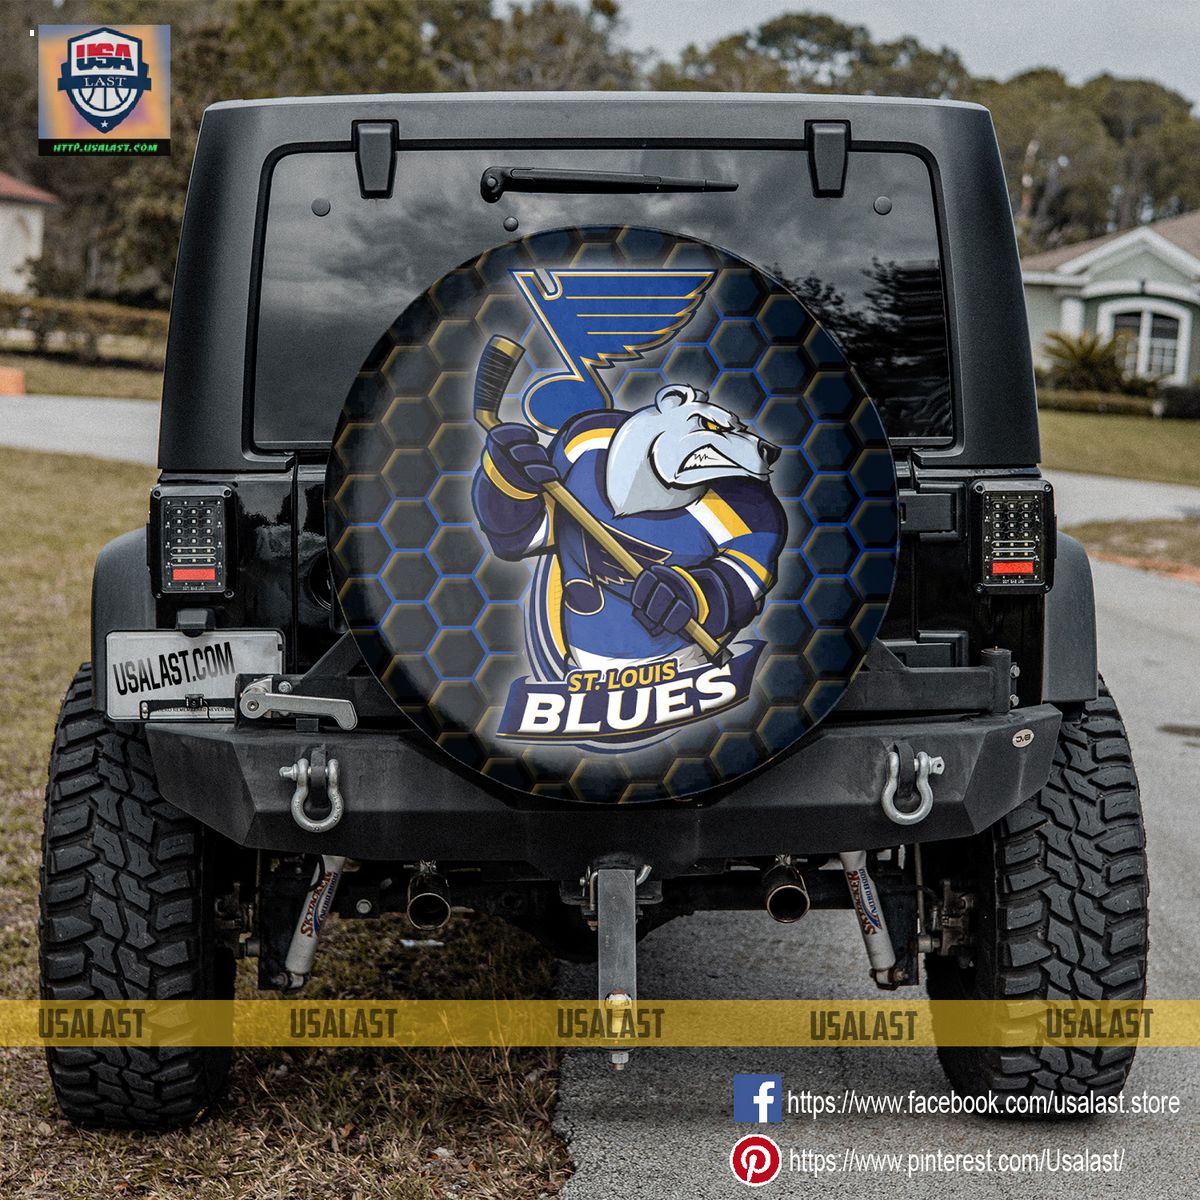 St. Louis Blues MLB Mascot Spare Tire Cover - Good one dear